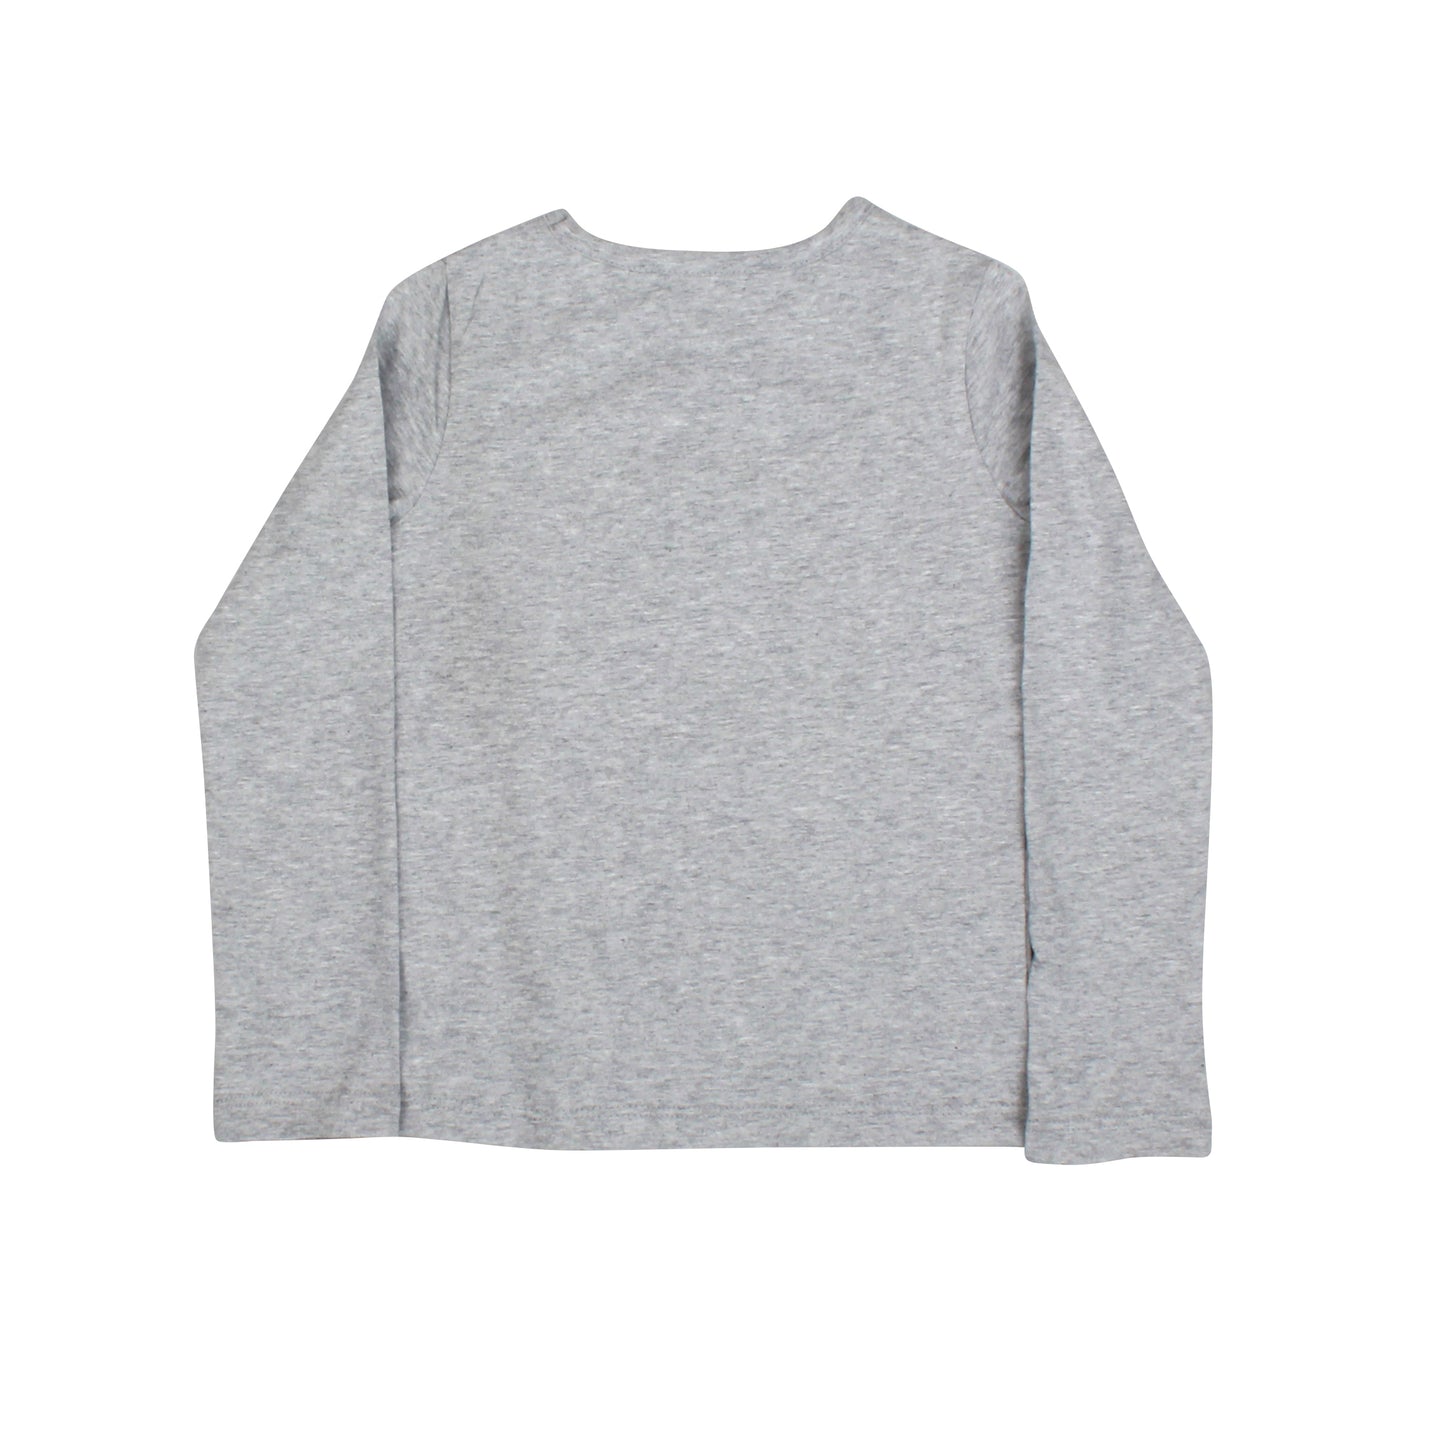 Grey Bird Printed Full Sleeves Kids T-shirt